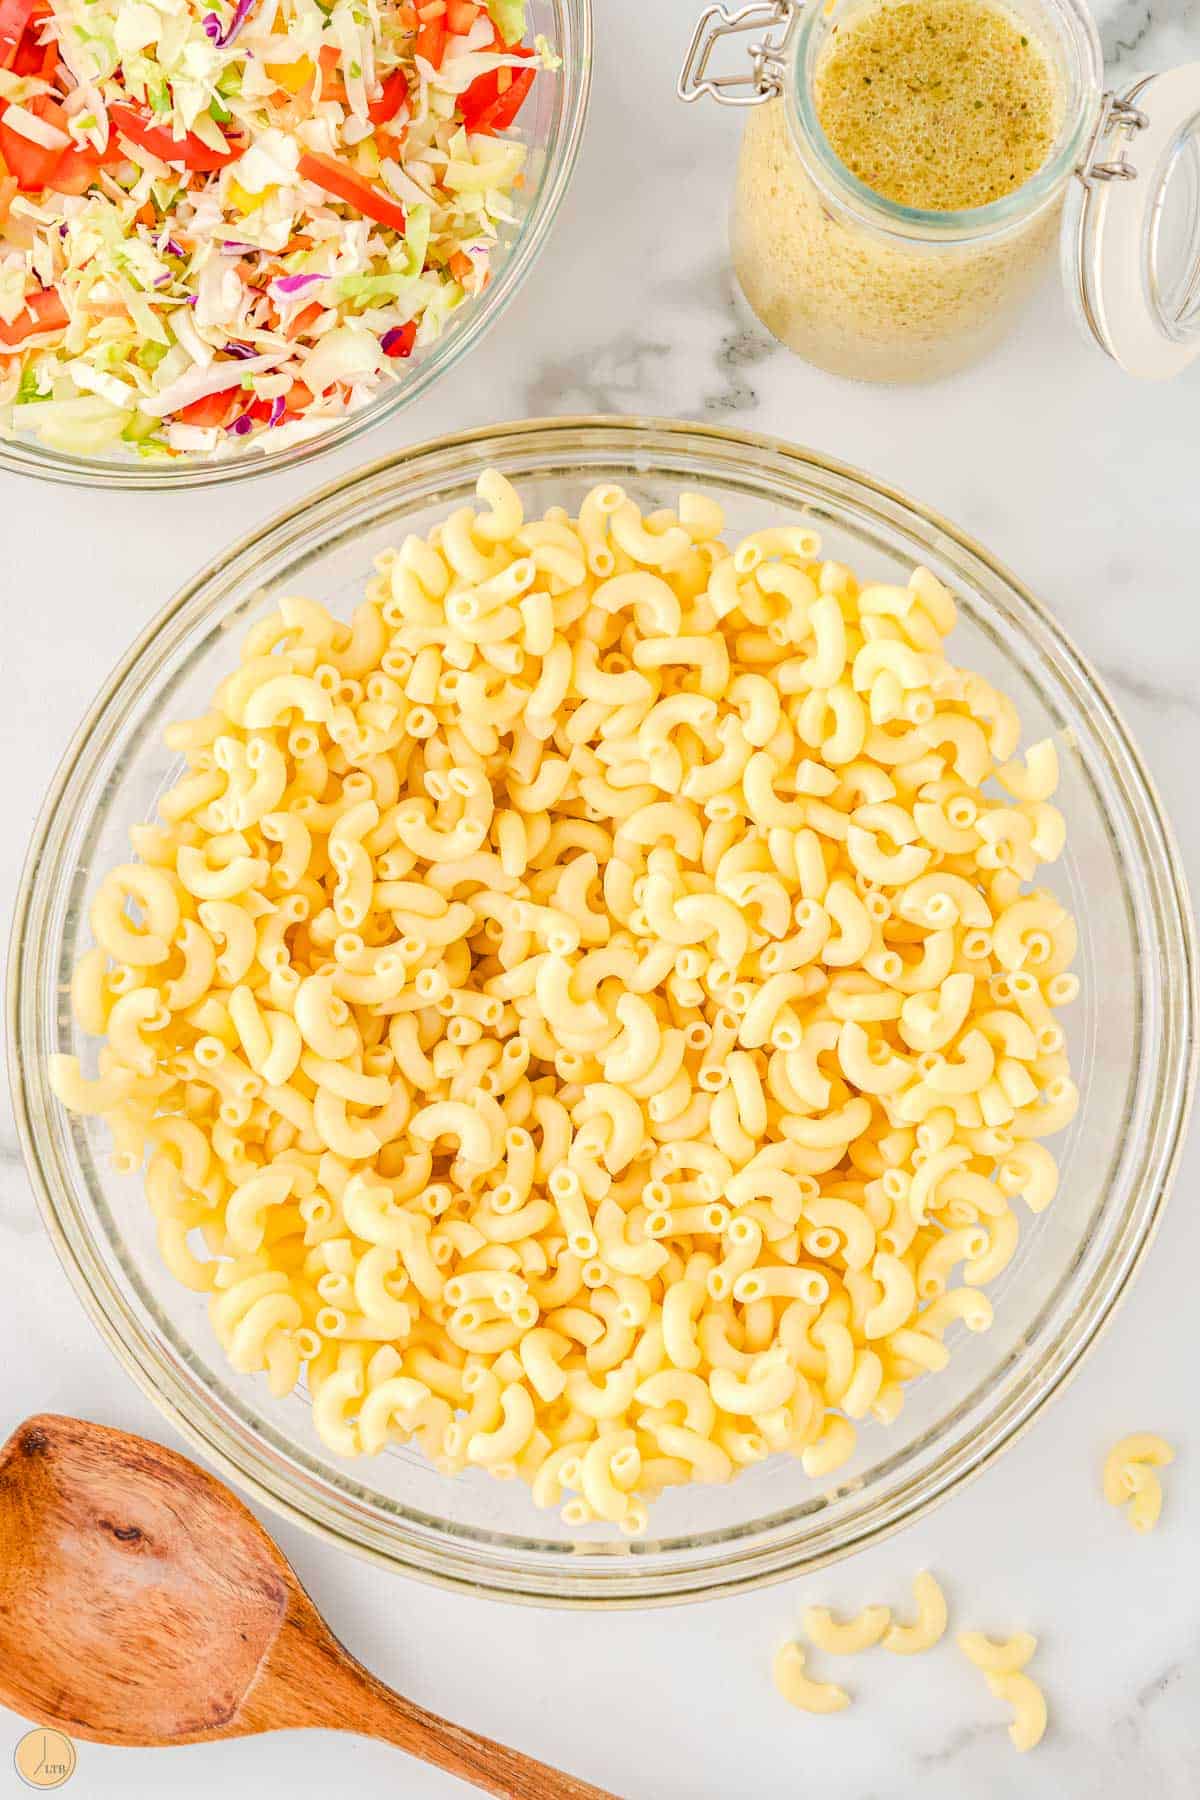 basic macaroni salad starts with cooked macaroni